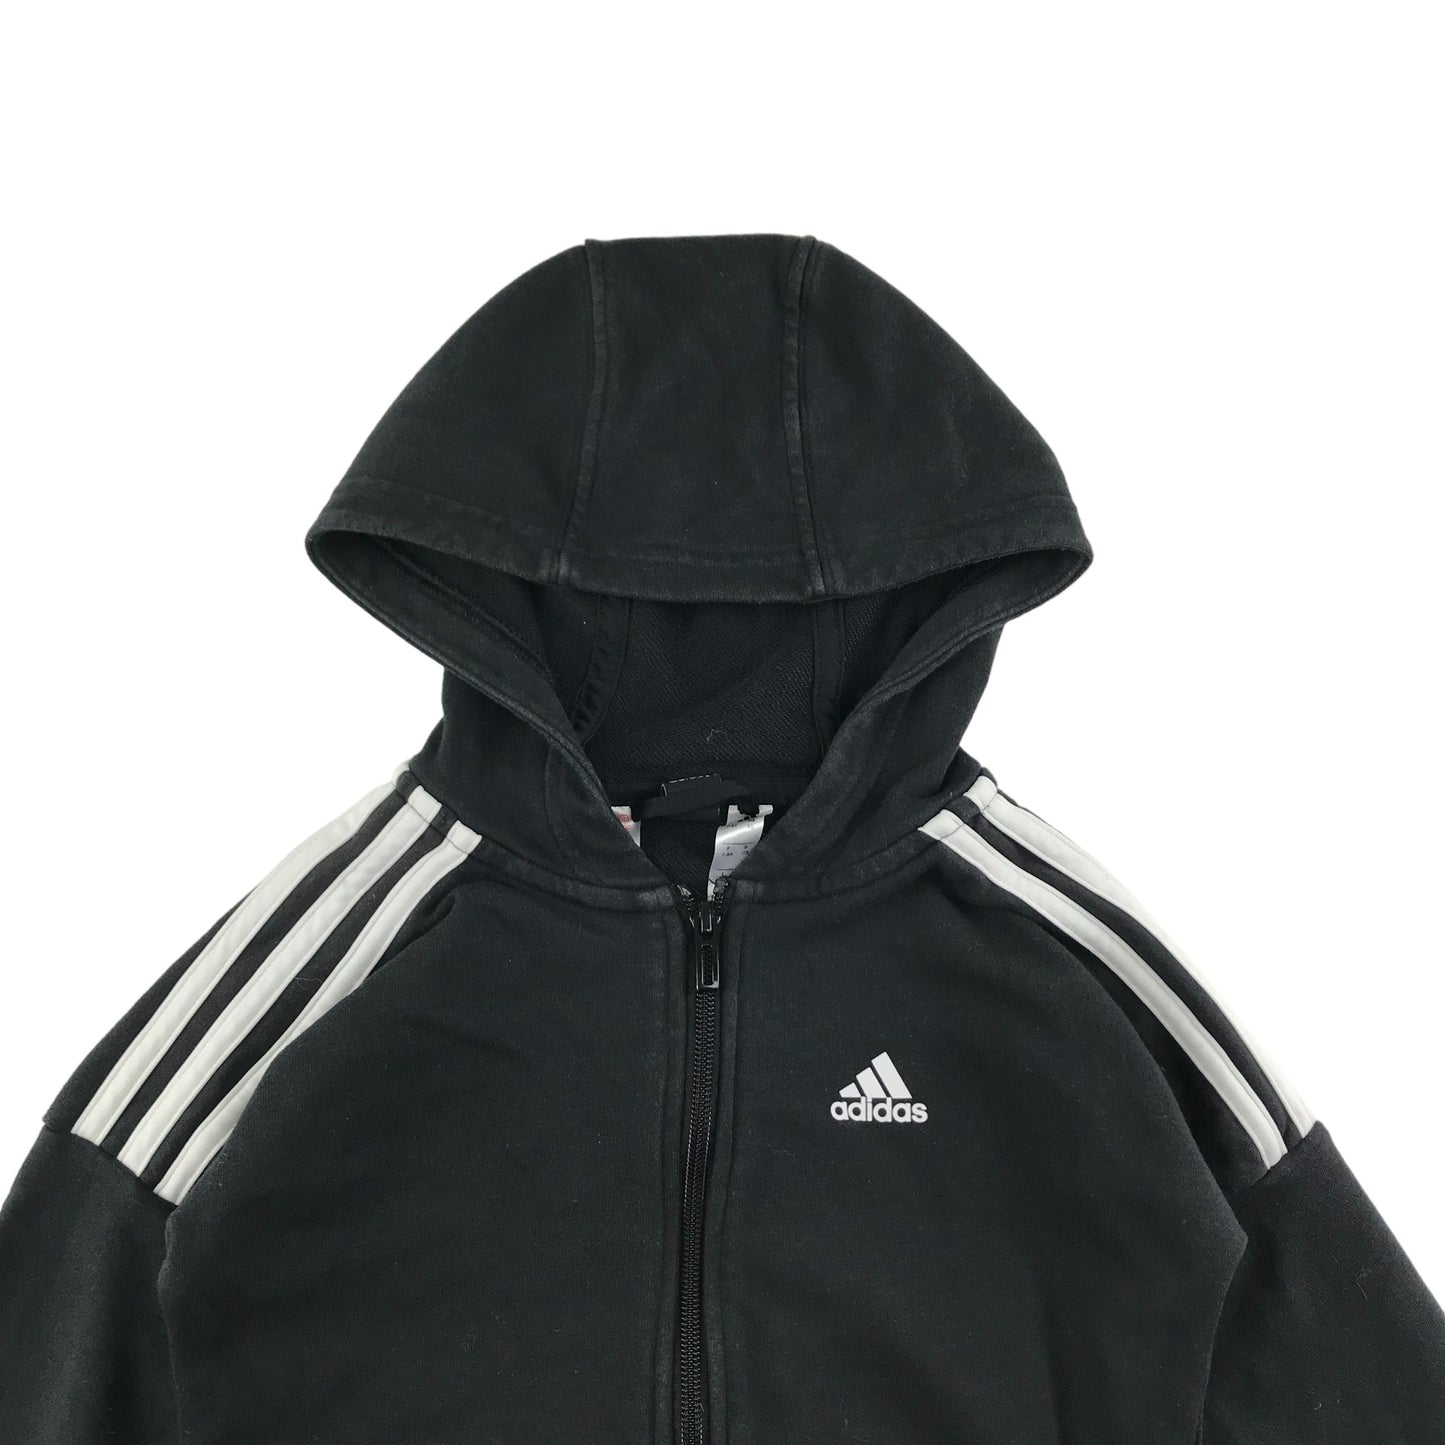 Adidas Hoodie Age 7 Black Classic Zipper Top Three Stripe Shoulder Design